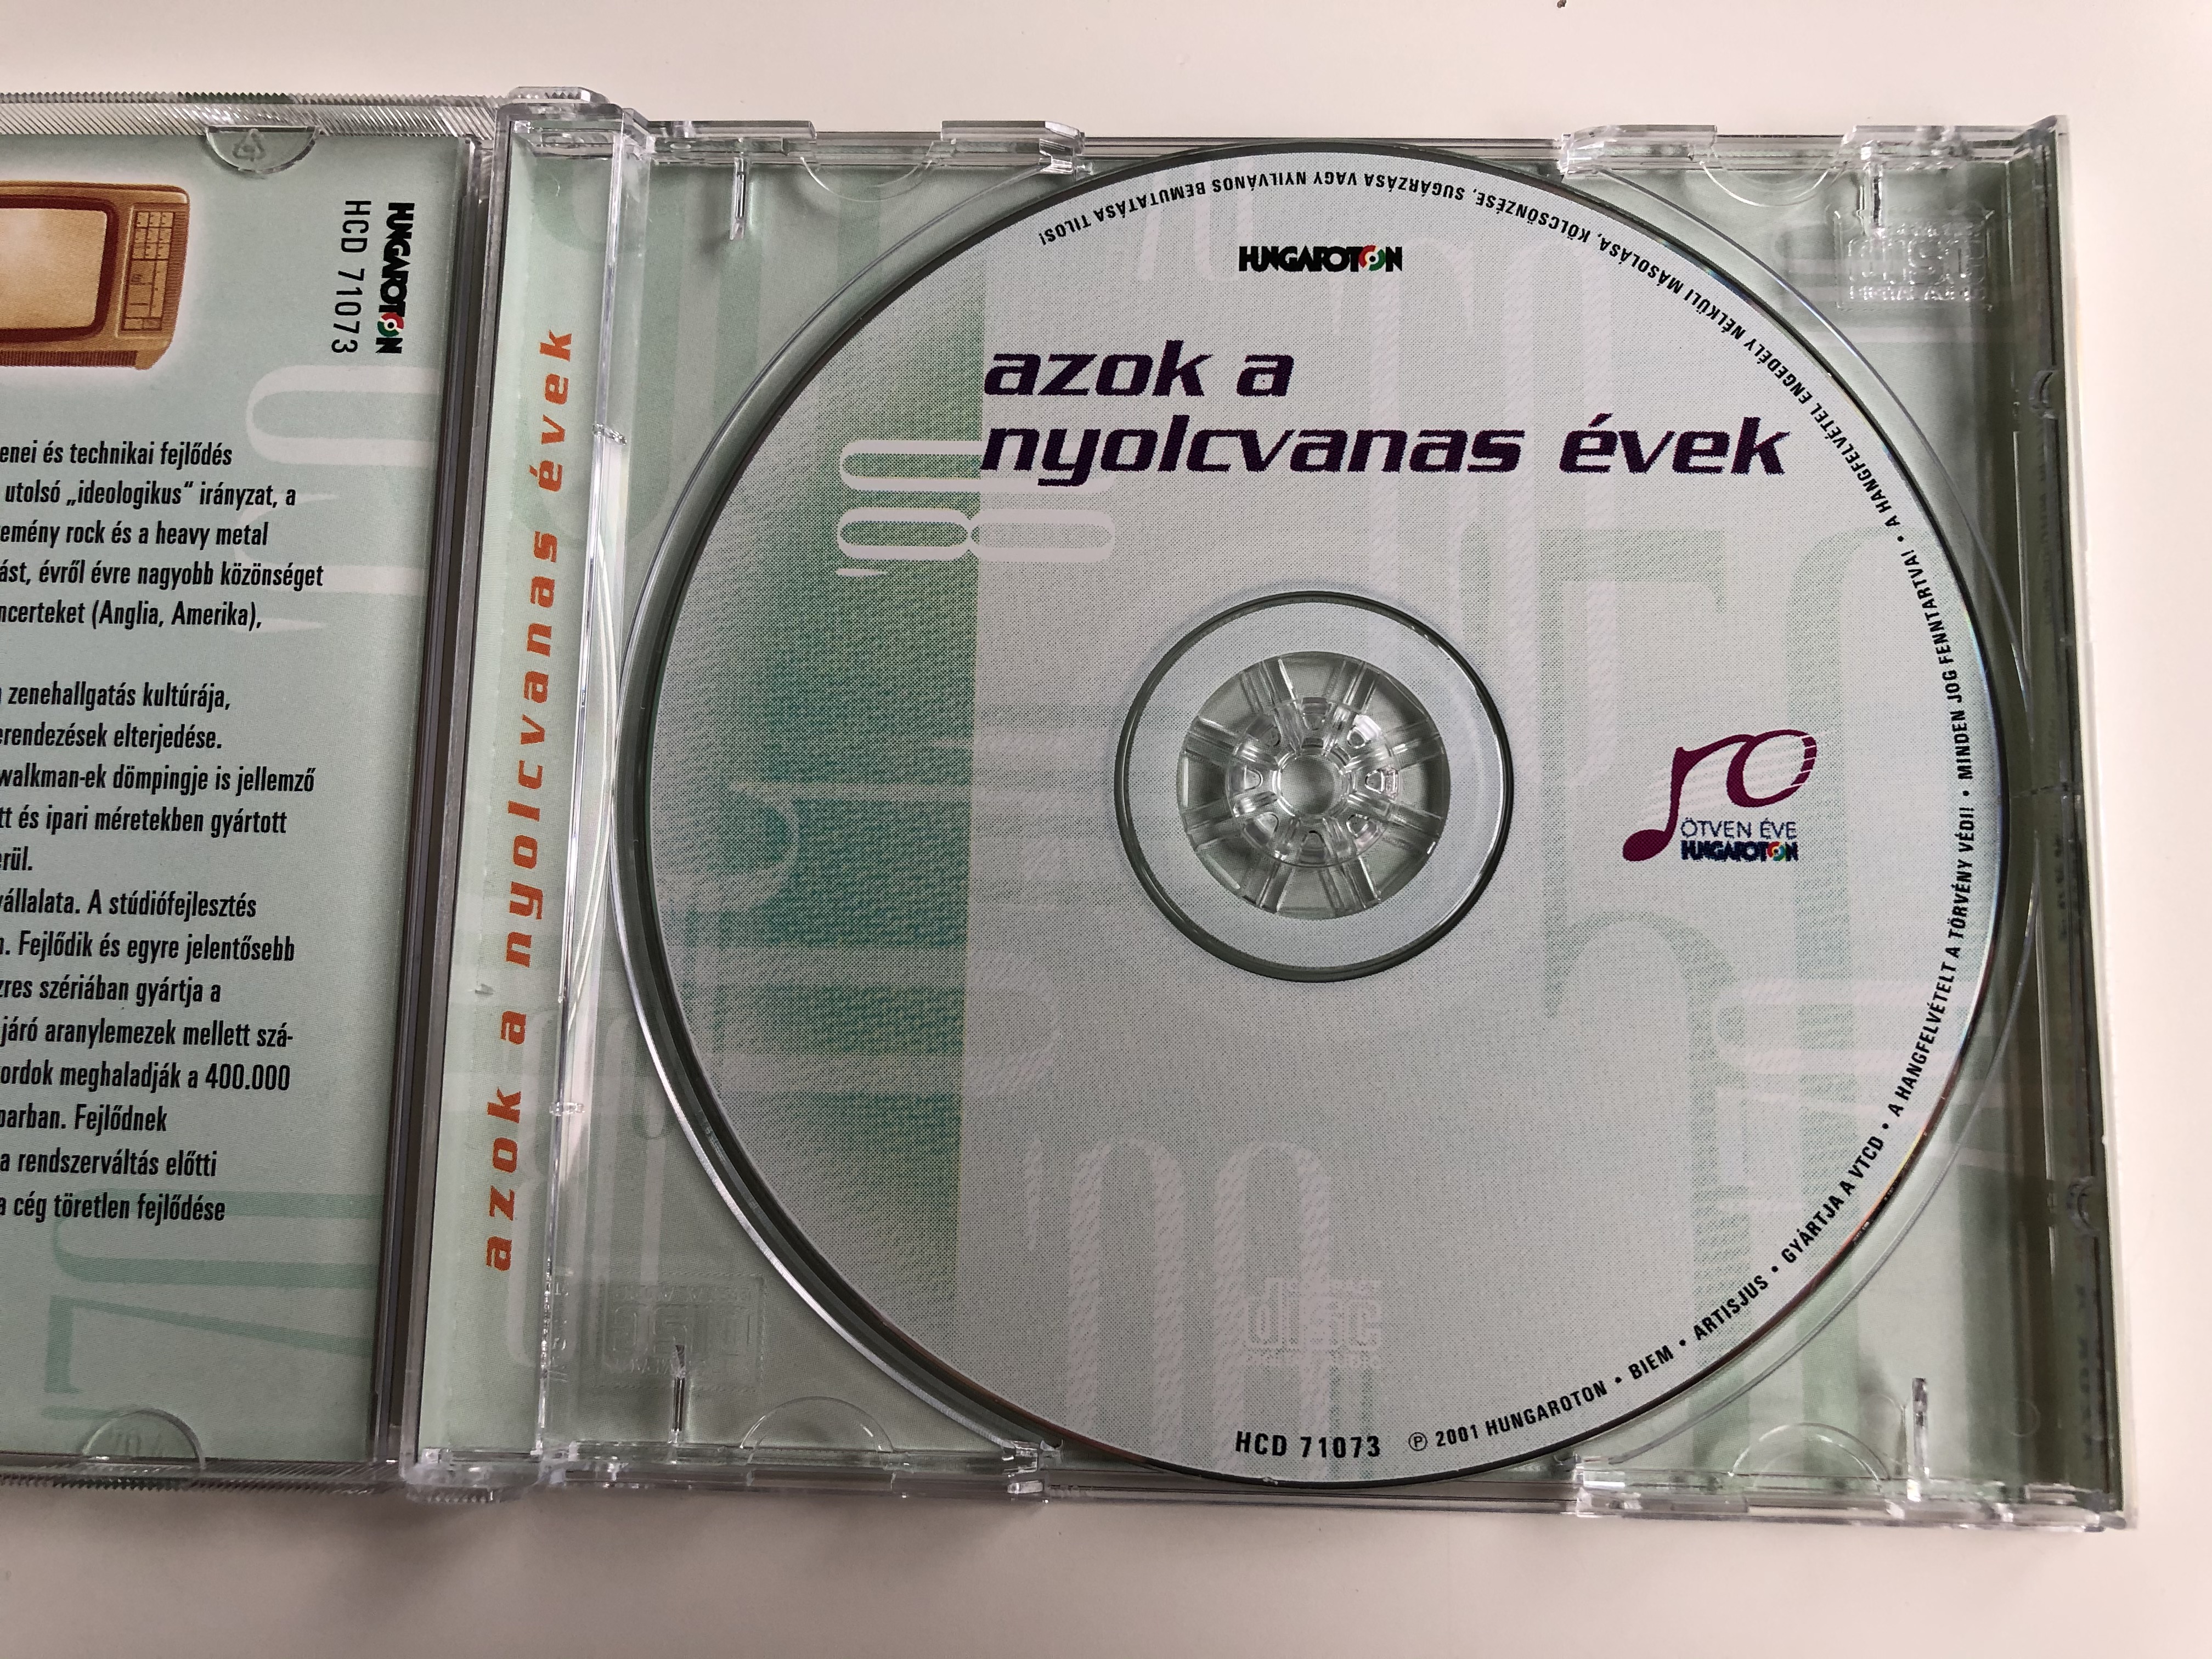 azok-a-nyolcvanas-vek-hungaroton-audio-cd-2001-hcd-71073-5-.jpg